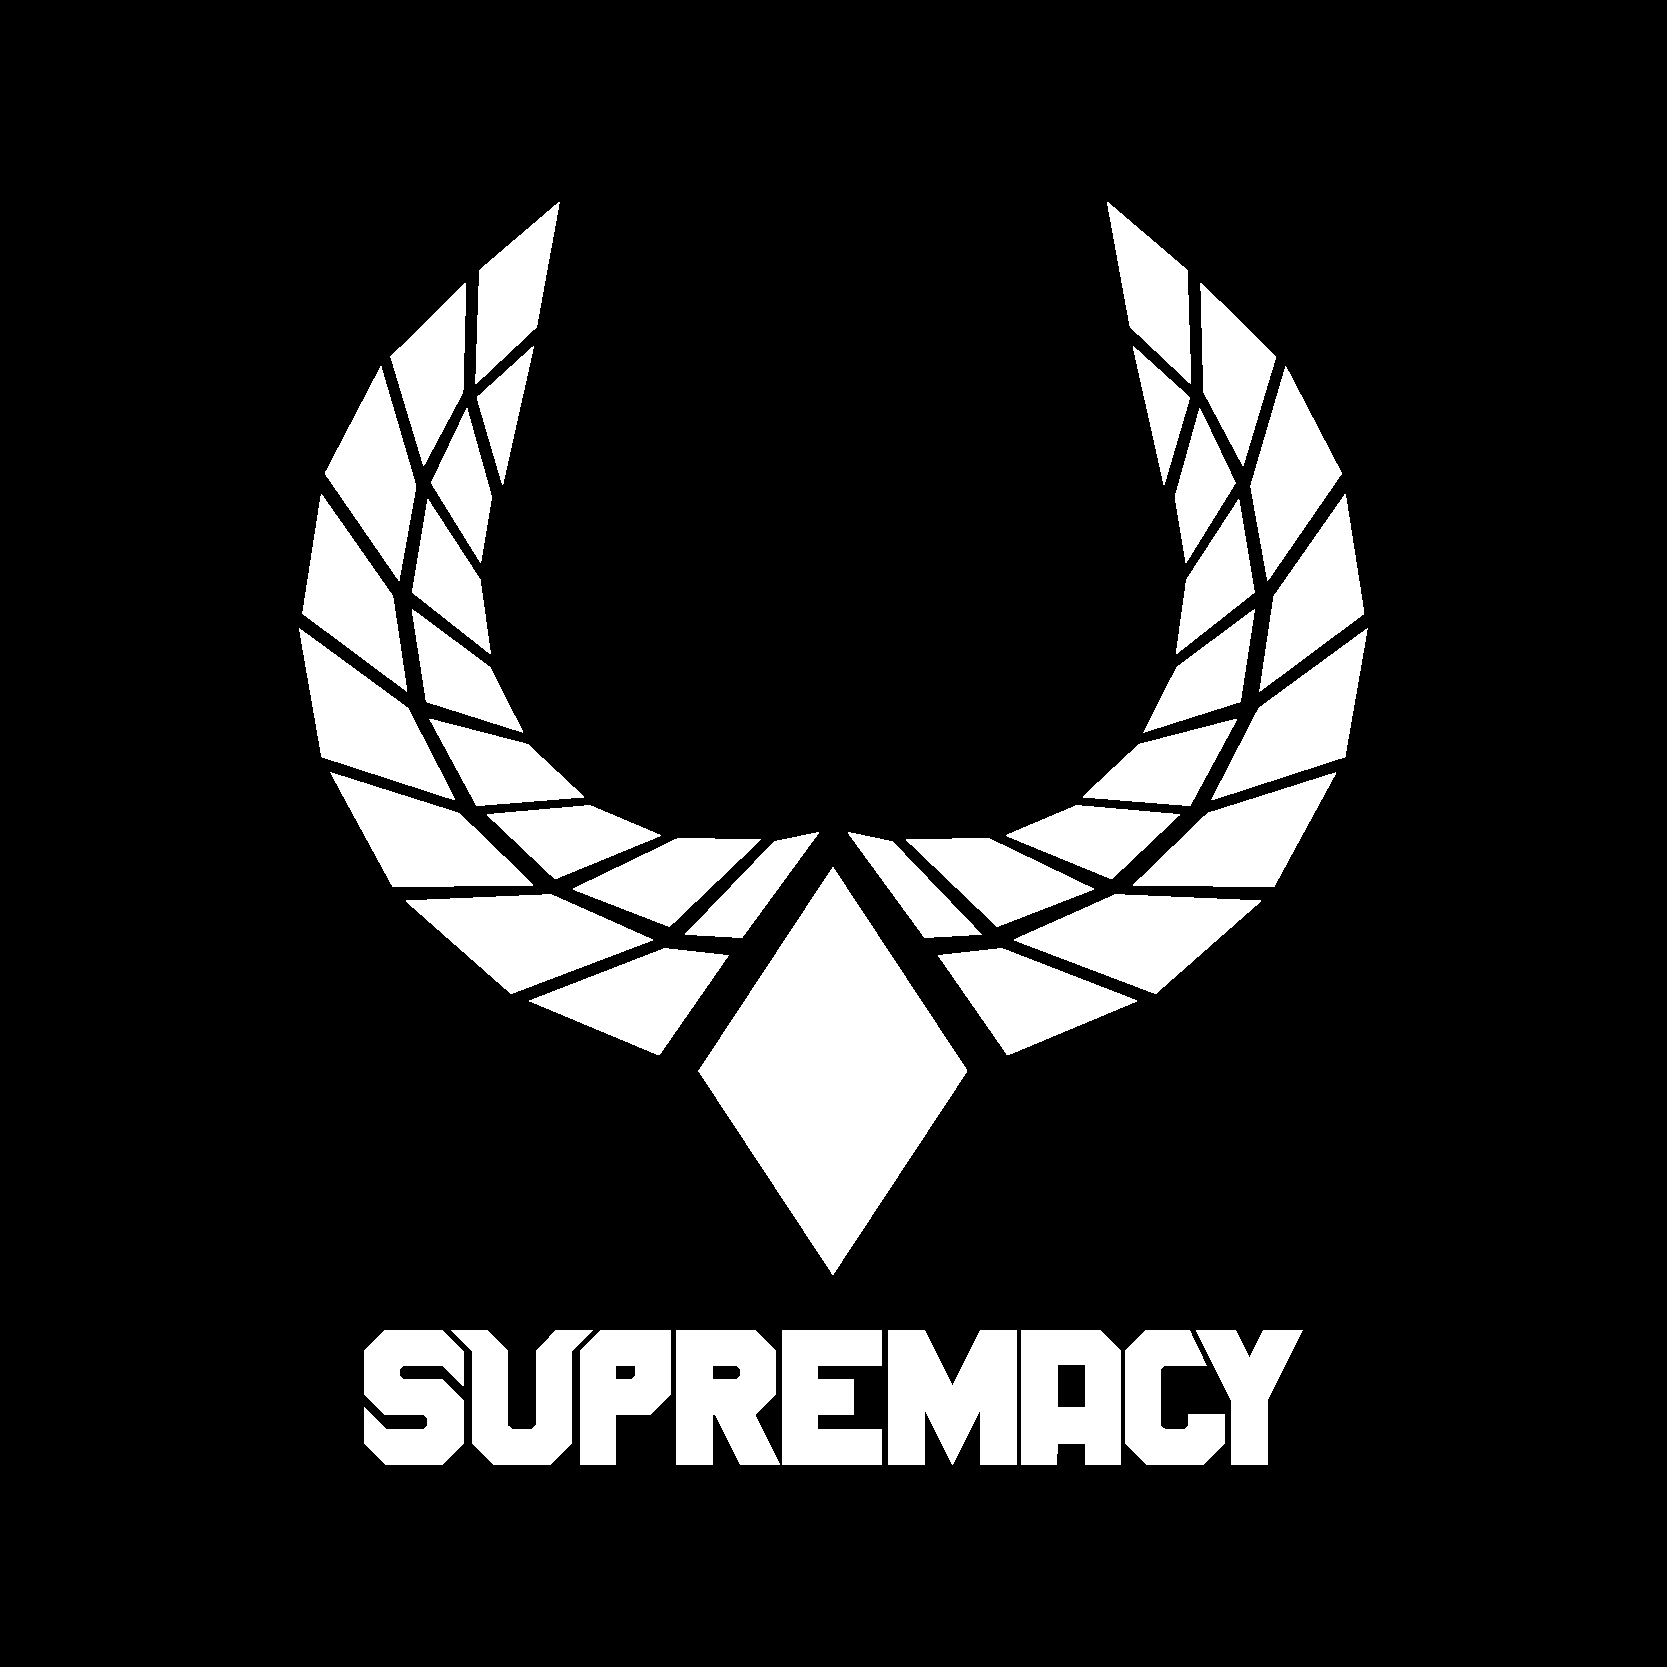 Supremacy 2019